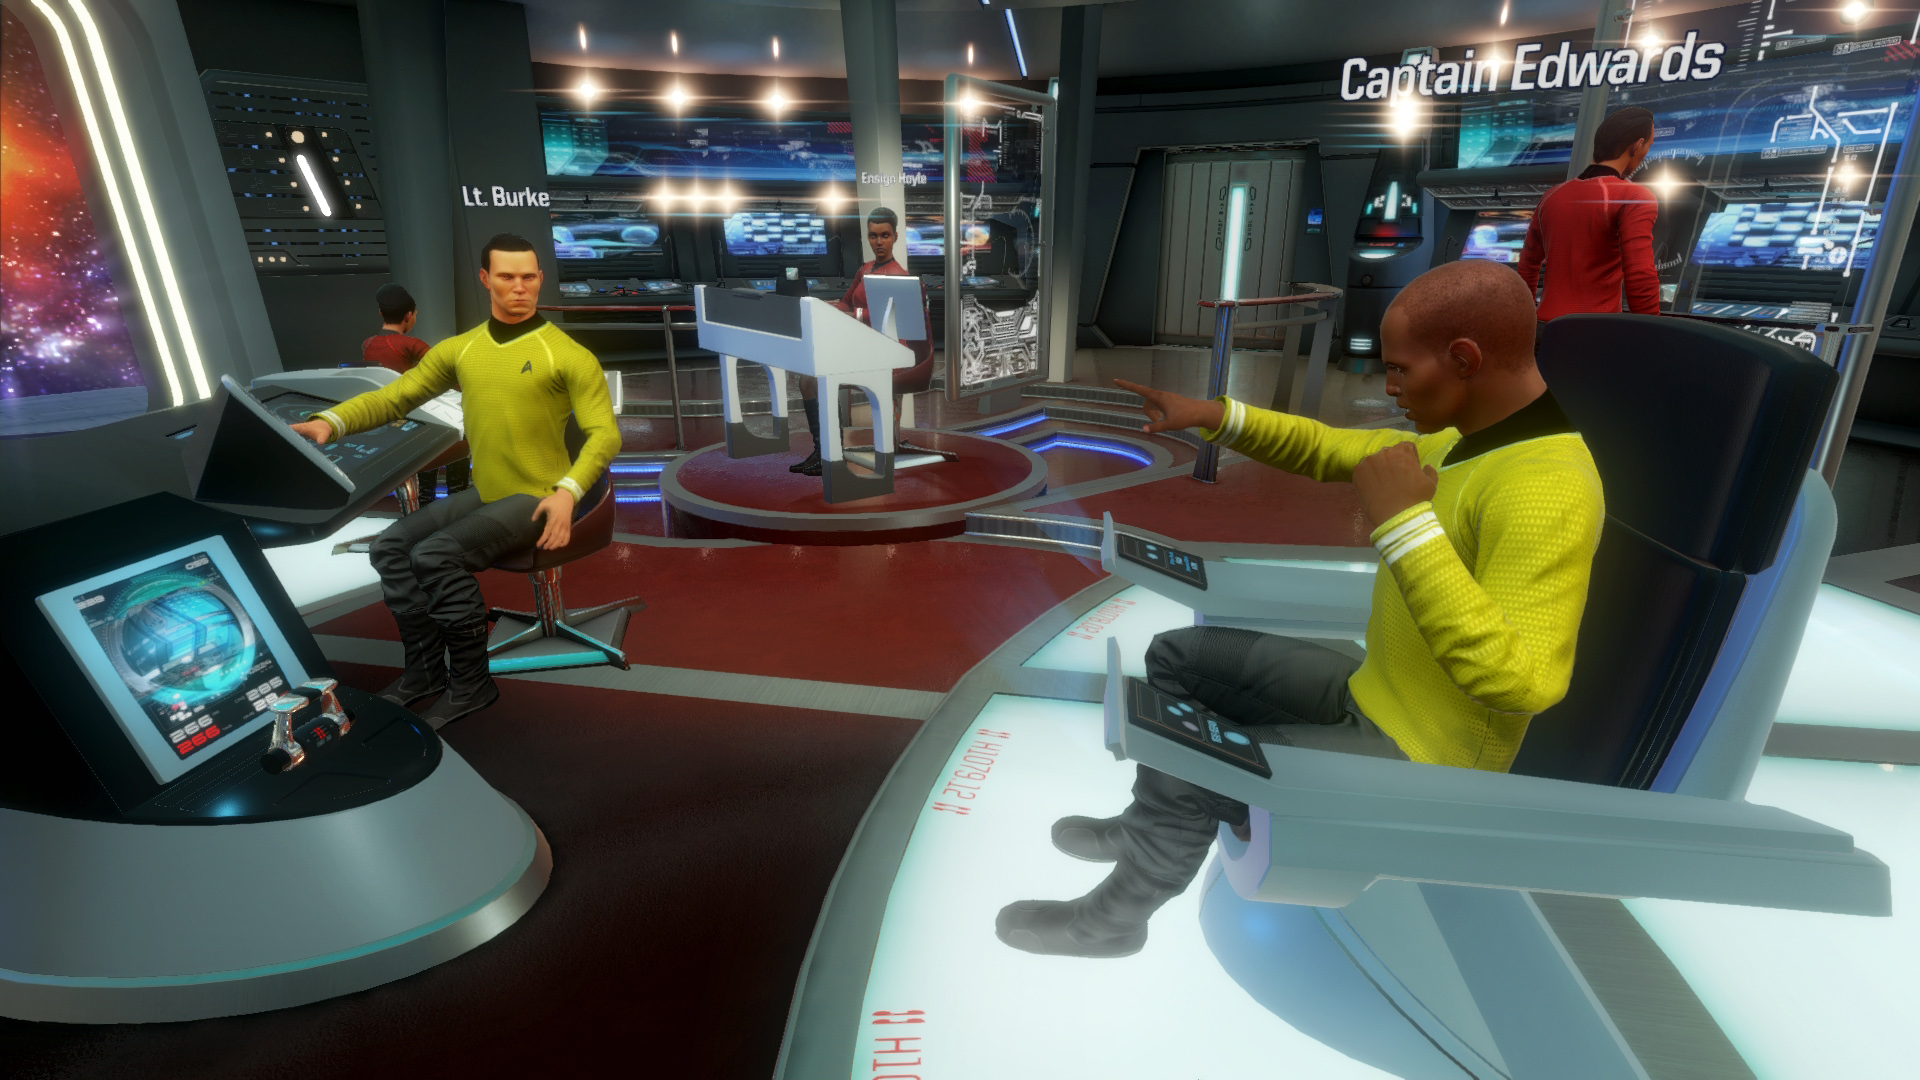 Humble 'Spring into VR' Bundle includes Job Simulator, Star Trek: Bridge  Crew, more